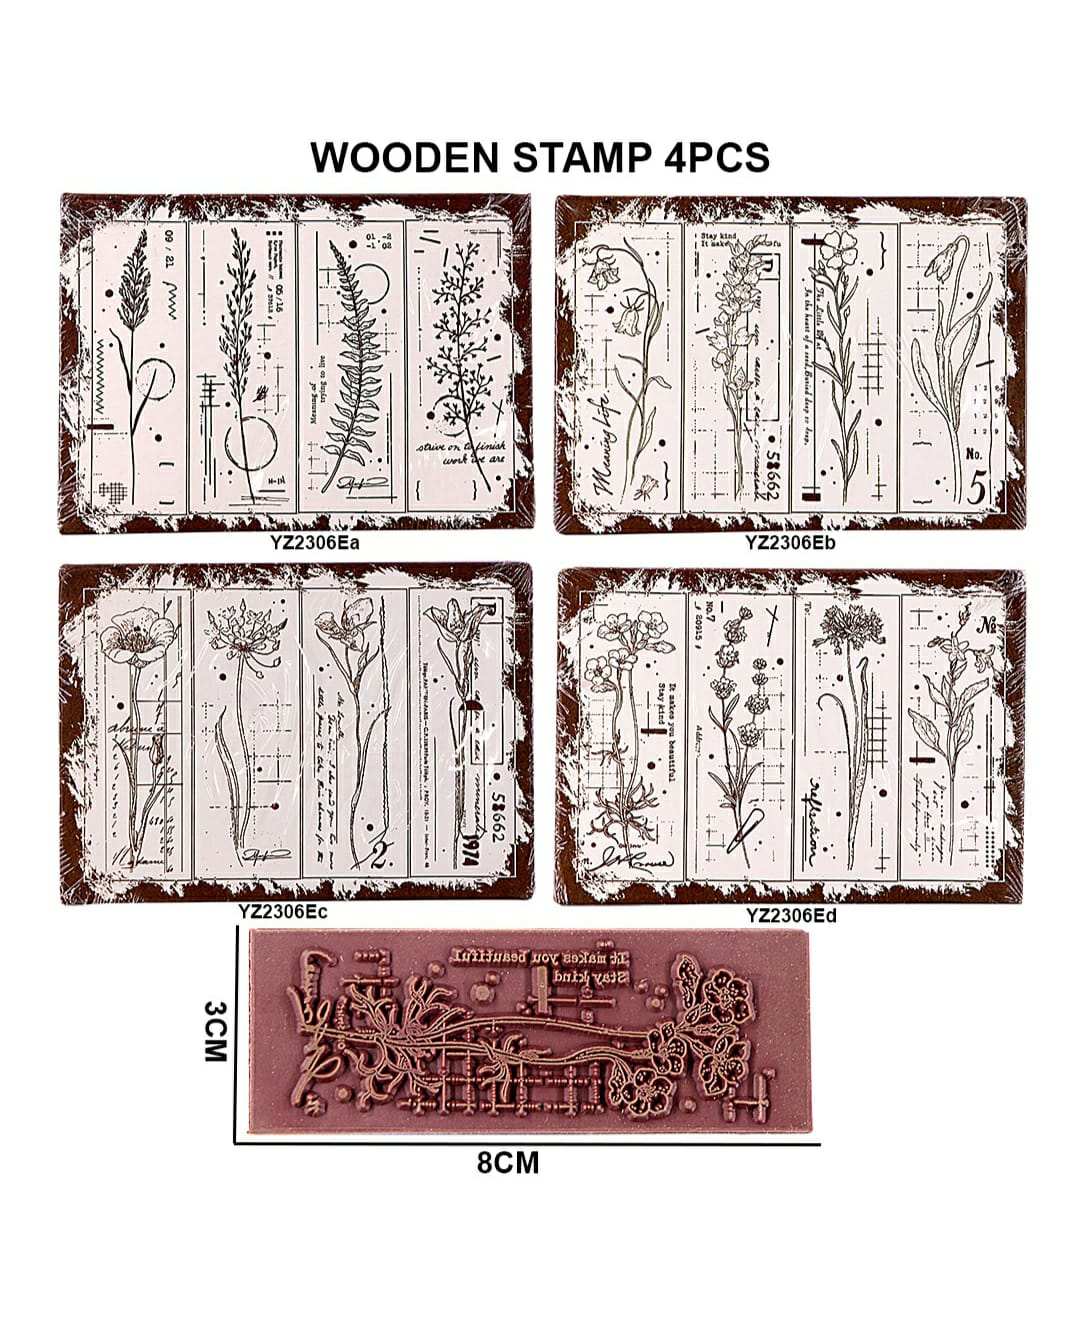 Wooden Stamp 4Pcs 325 Yz2306E | INKARTO